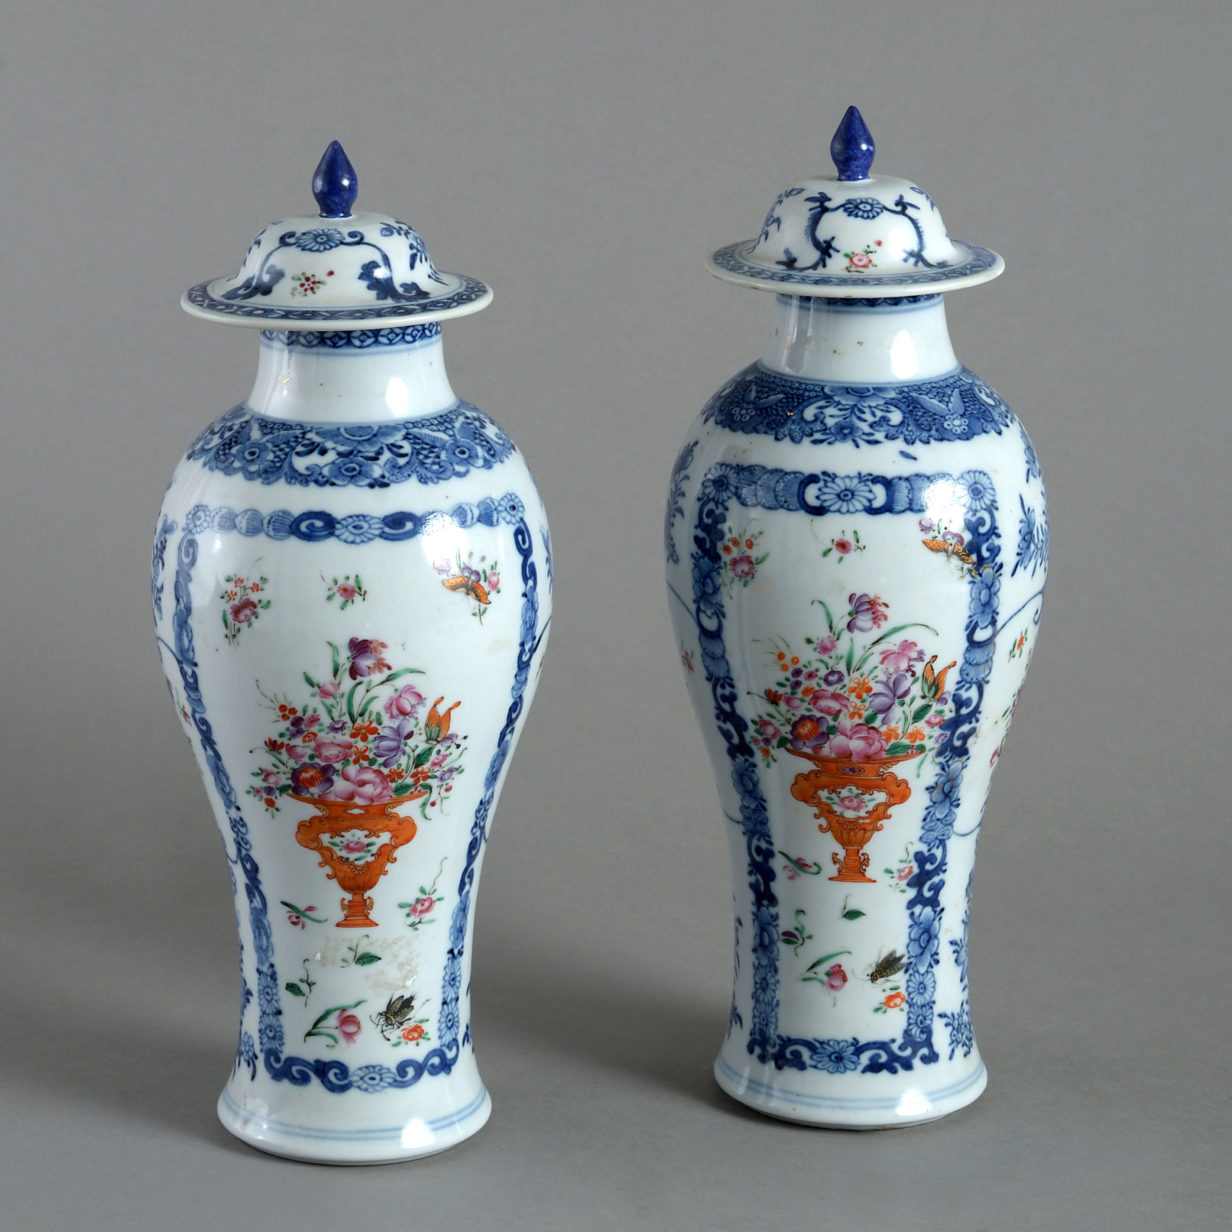 A pair of 18th century qianlong period porcelain vases